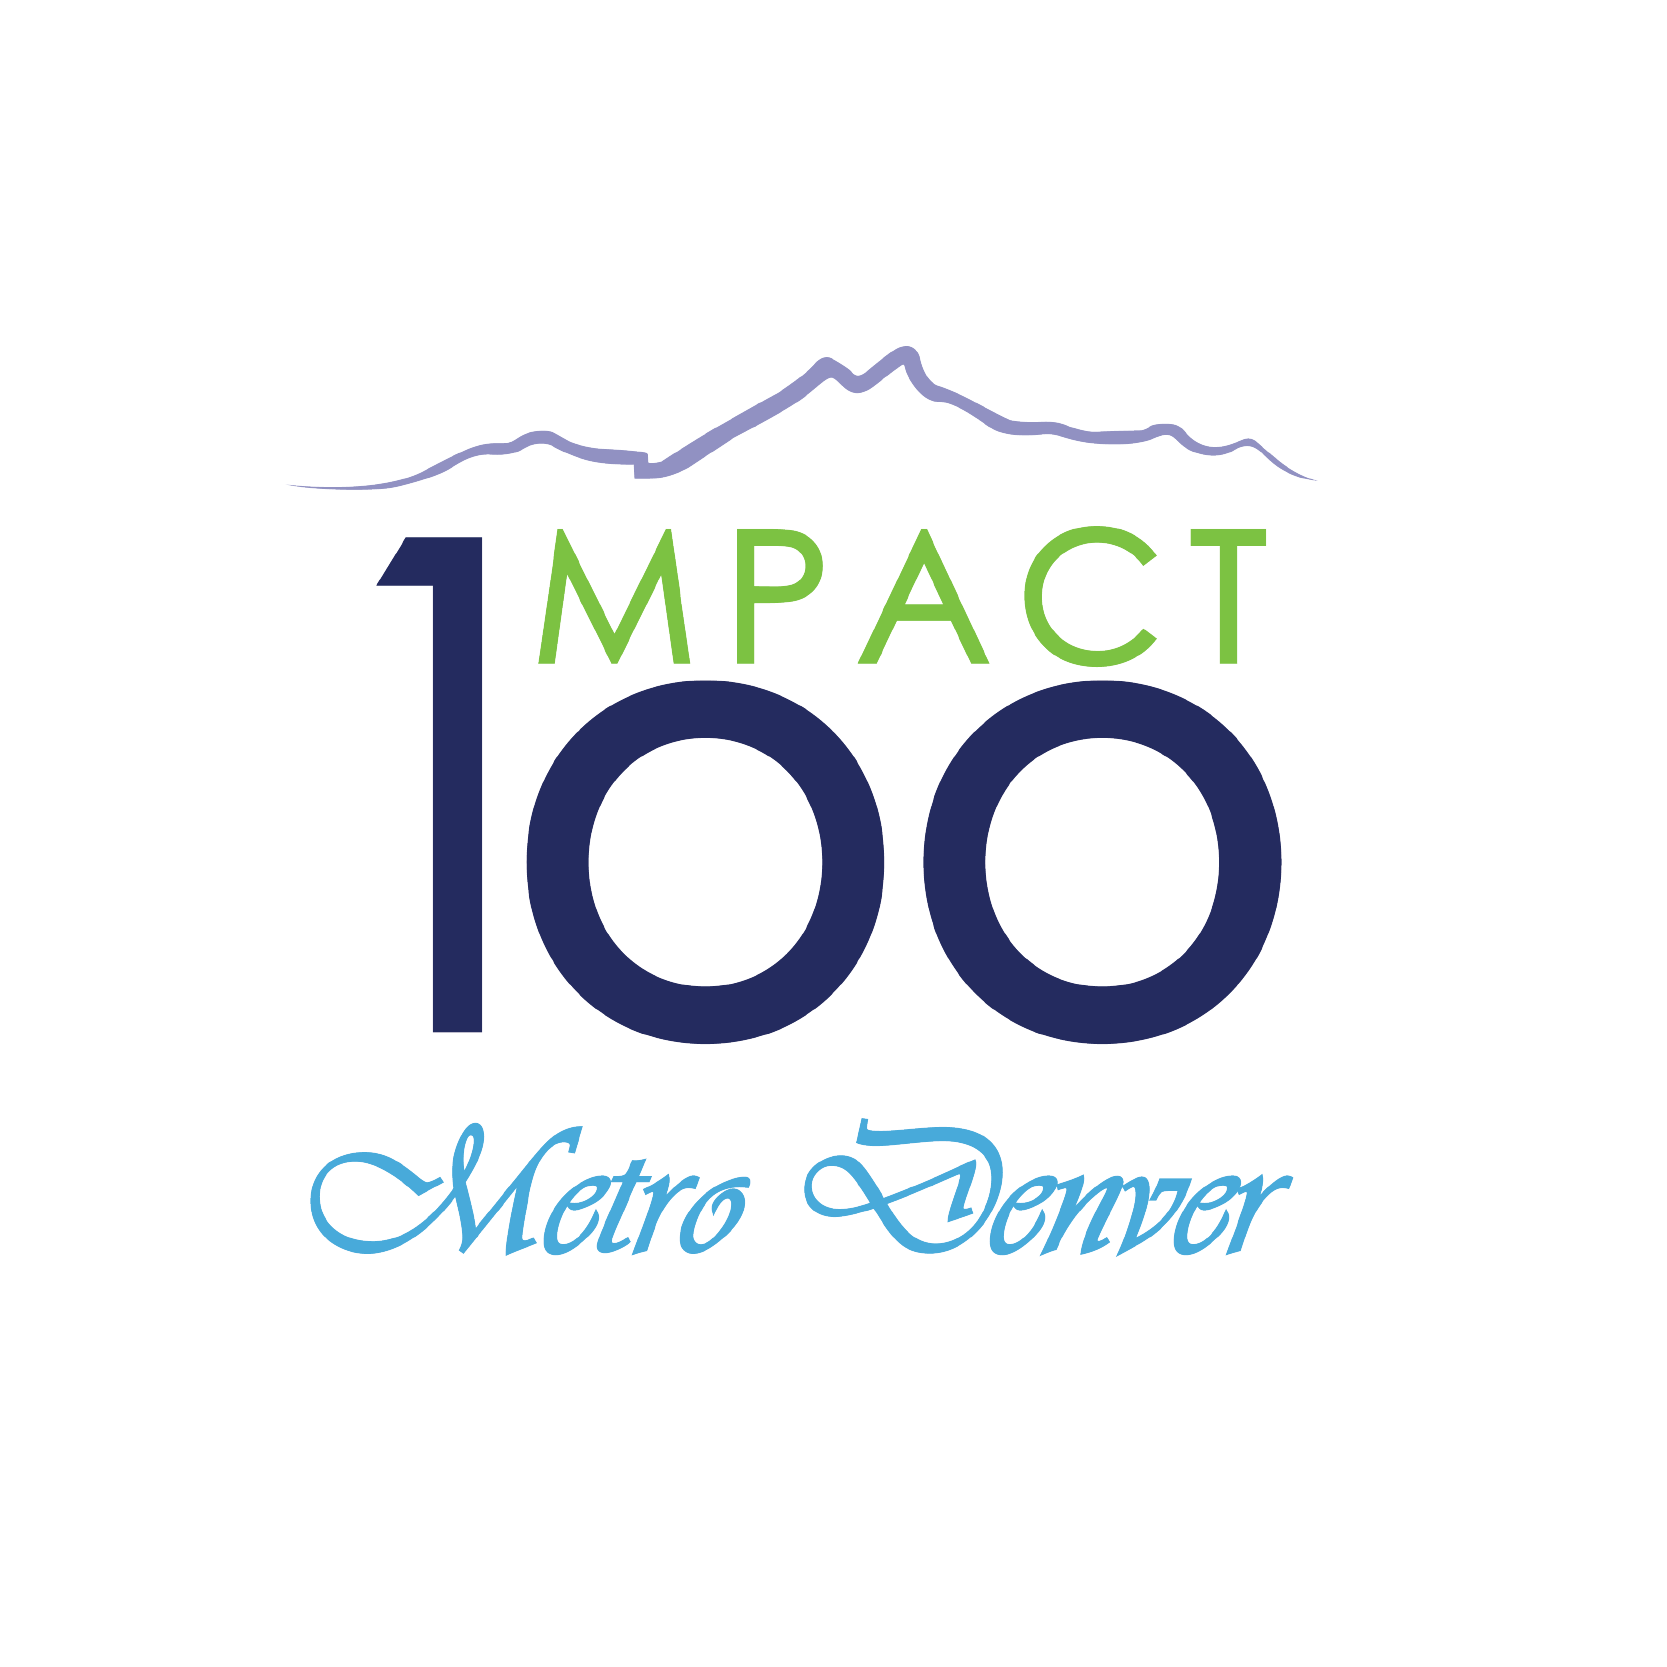 Impact100 Metro Denver